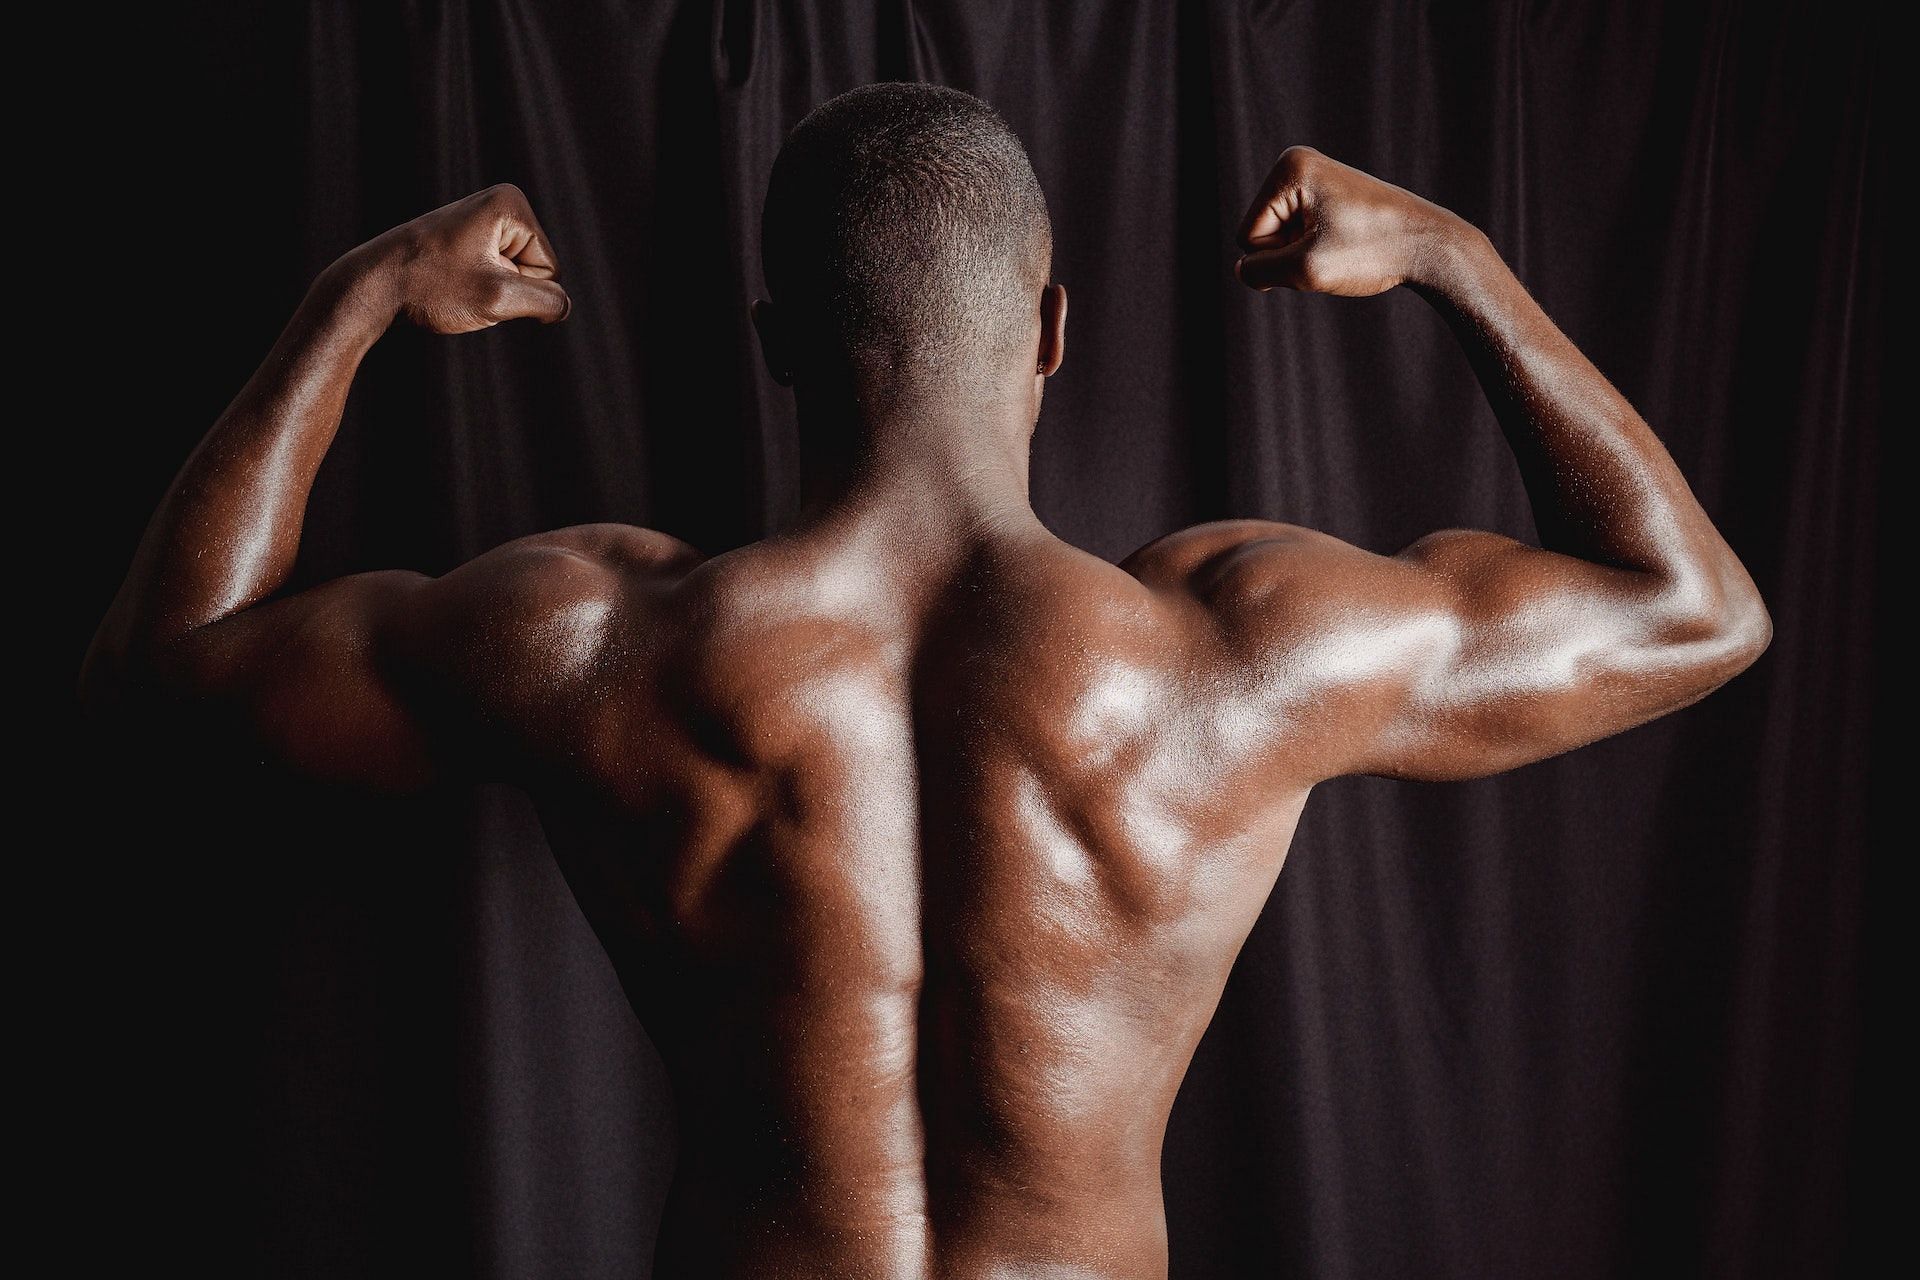 The front raise helps define upper body muscles. (Photo via Pexels/Mike Jones)